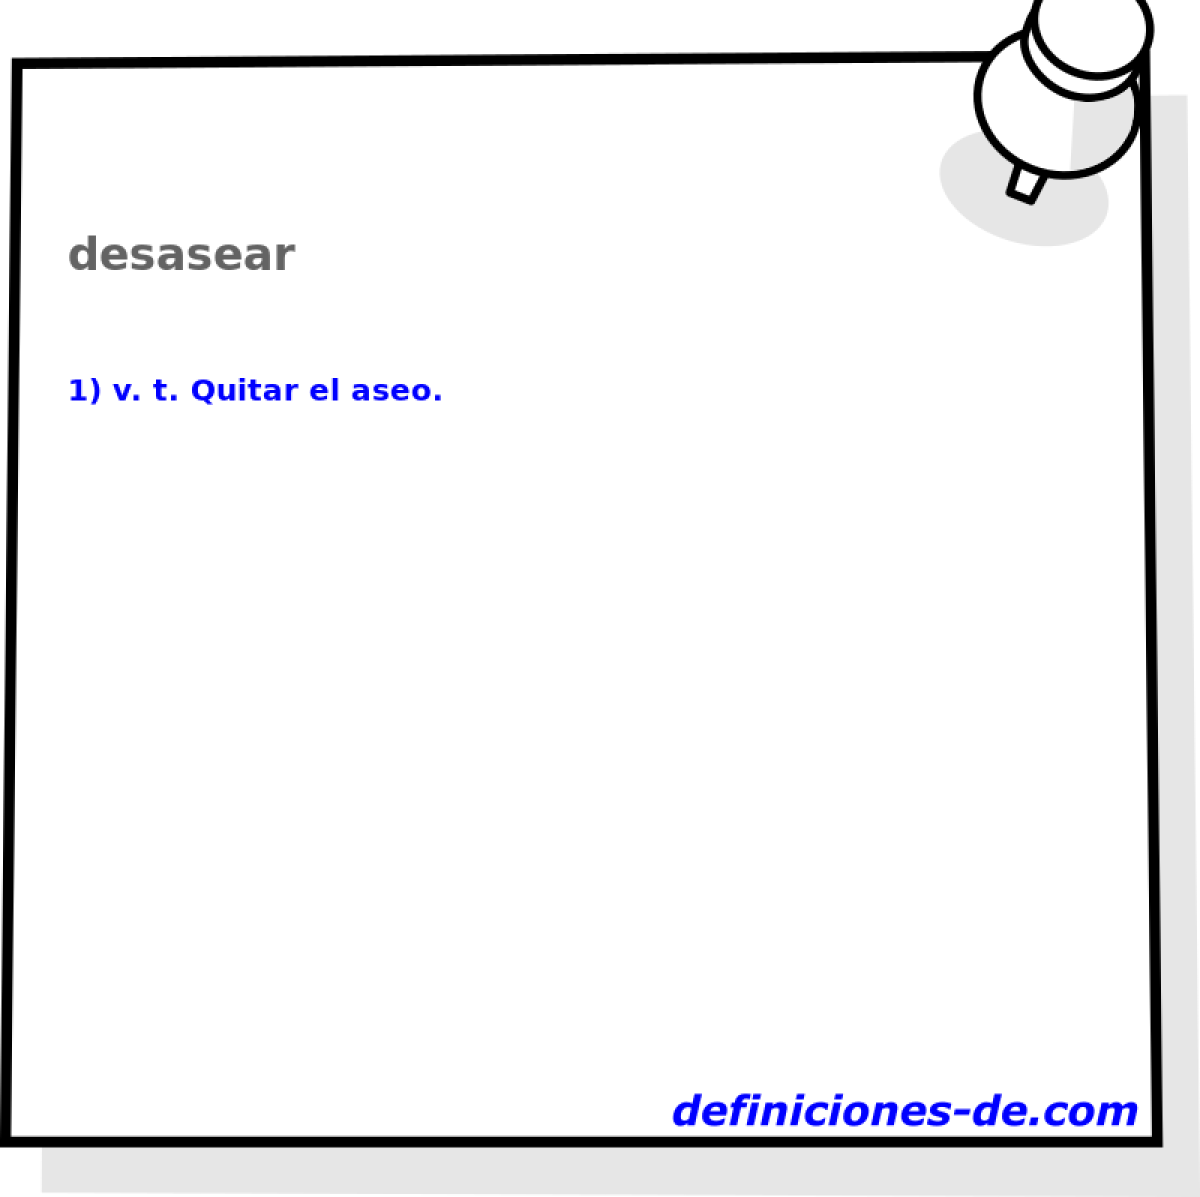 desasear 